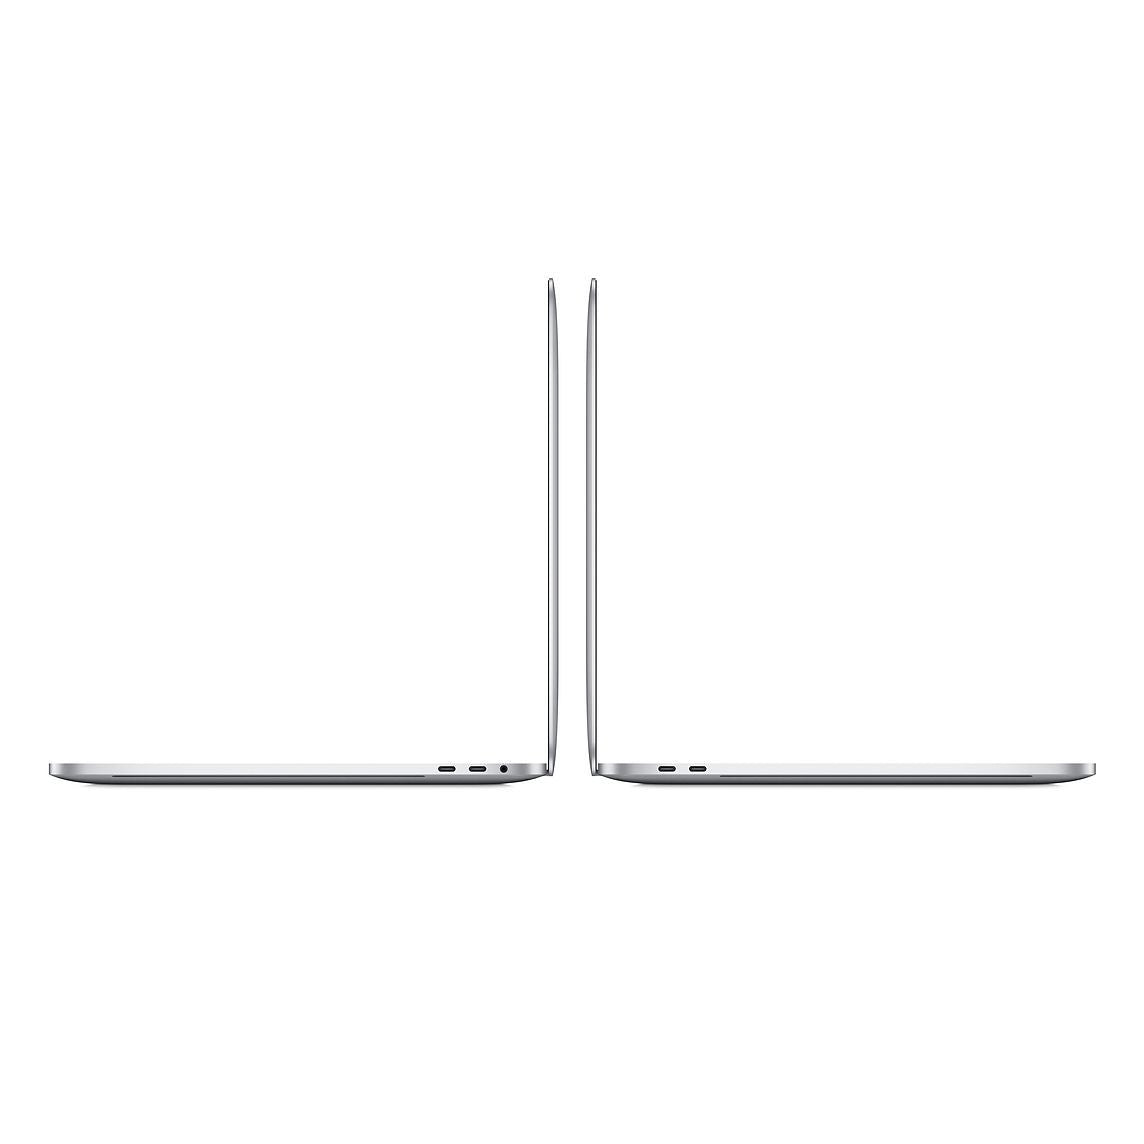 Macbook Pro 15-inch (Touchbar) - 2016 - i7 - Silver